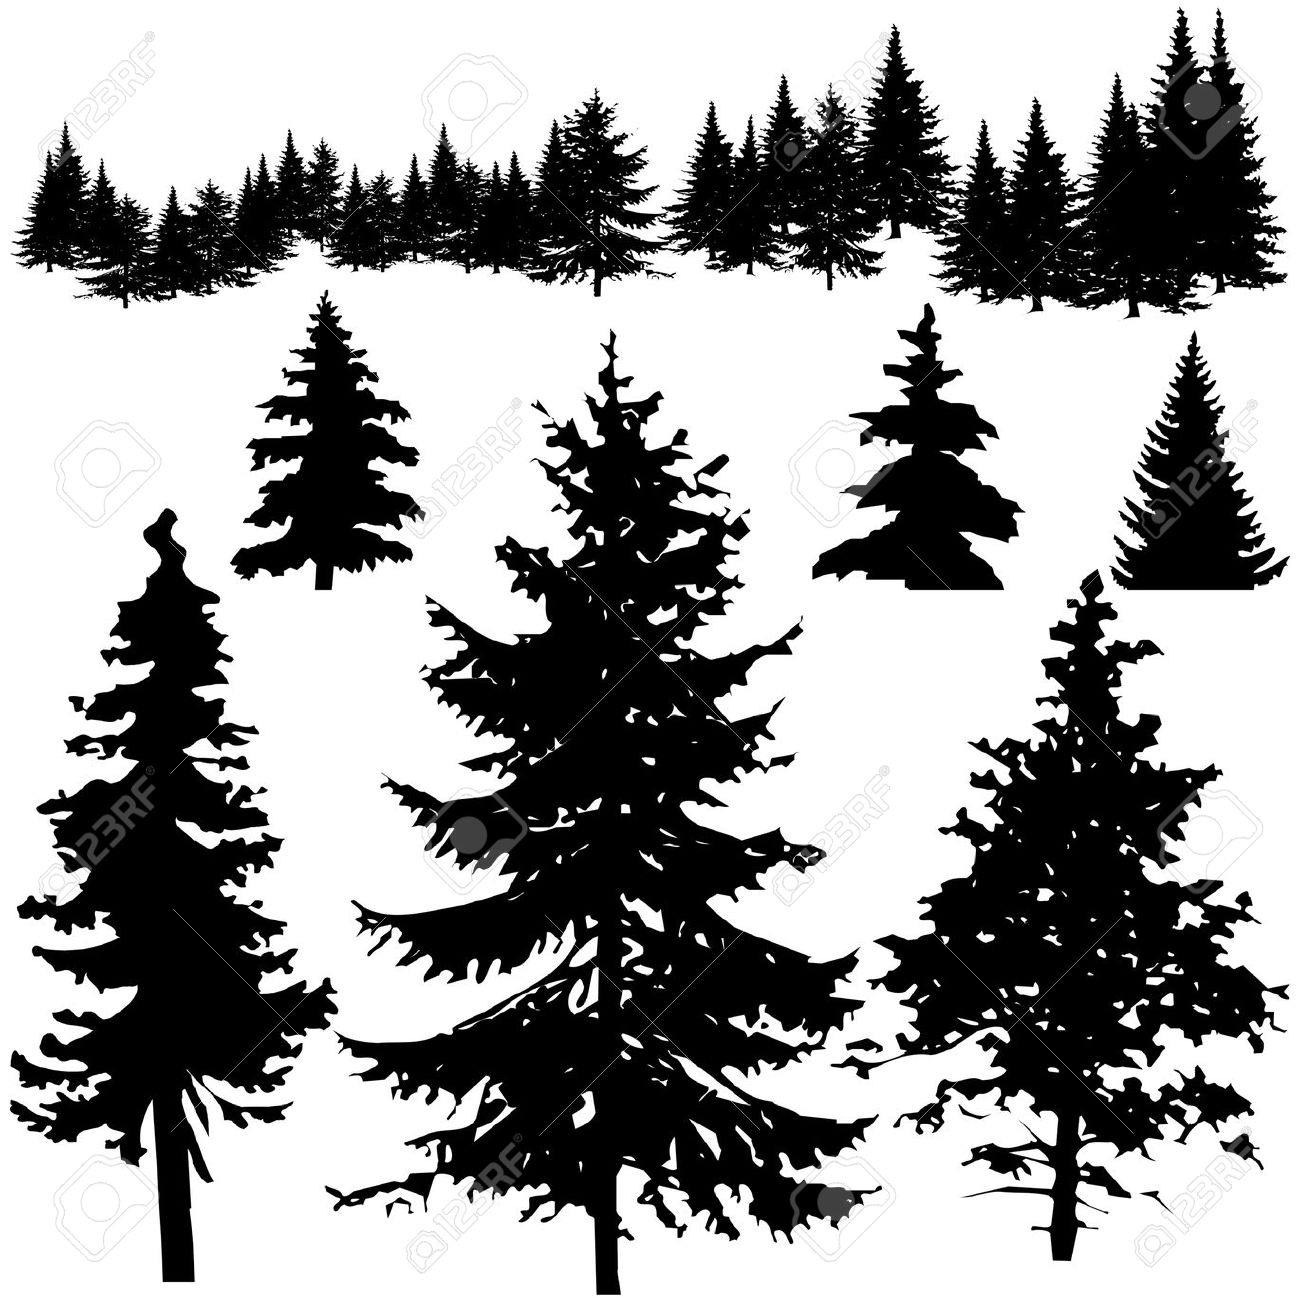 Pine tree silhouette clipart 2 - Cliparting.com